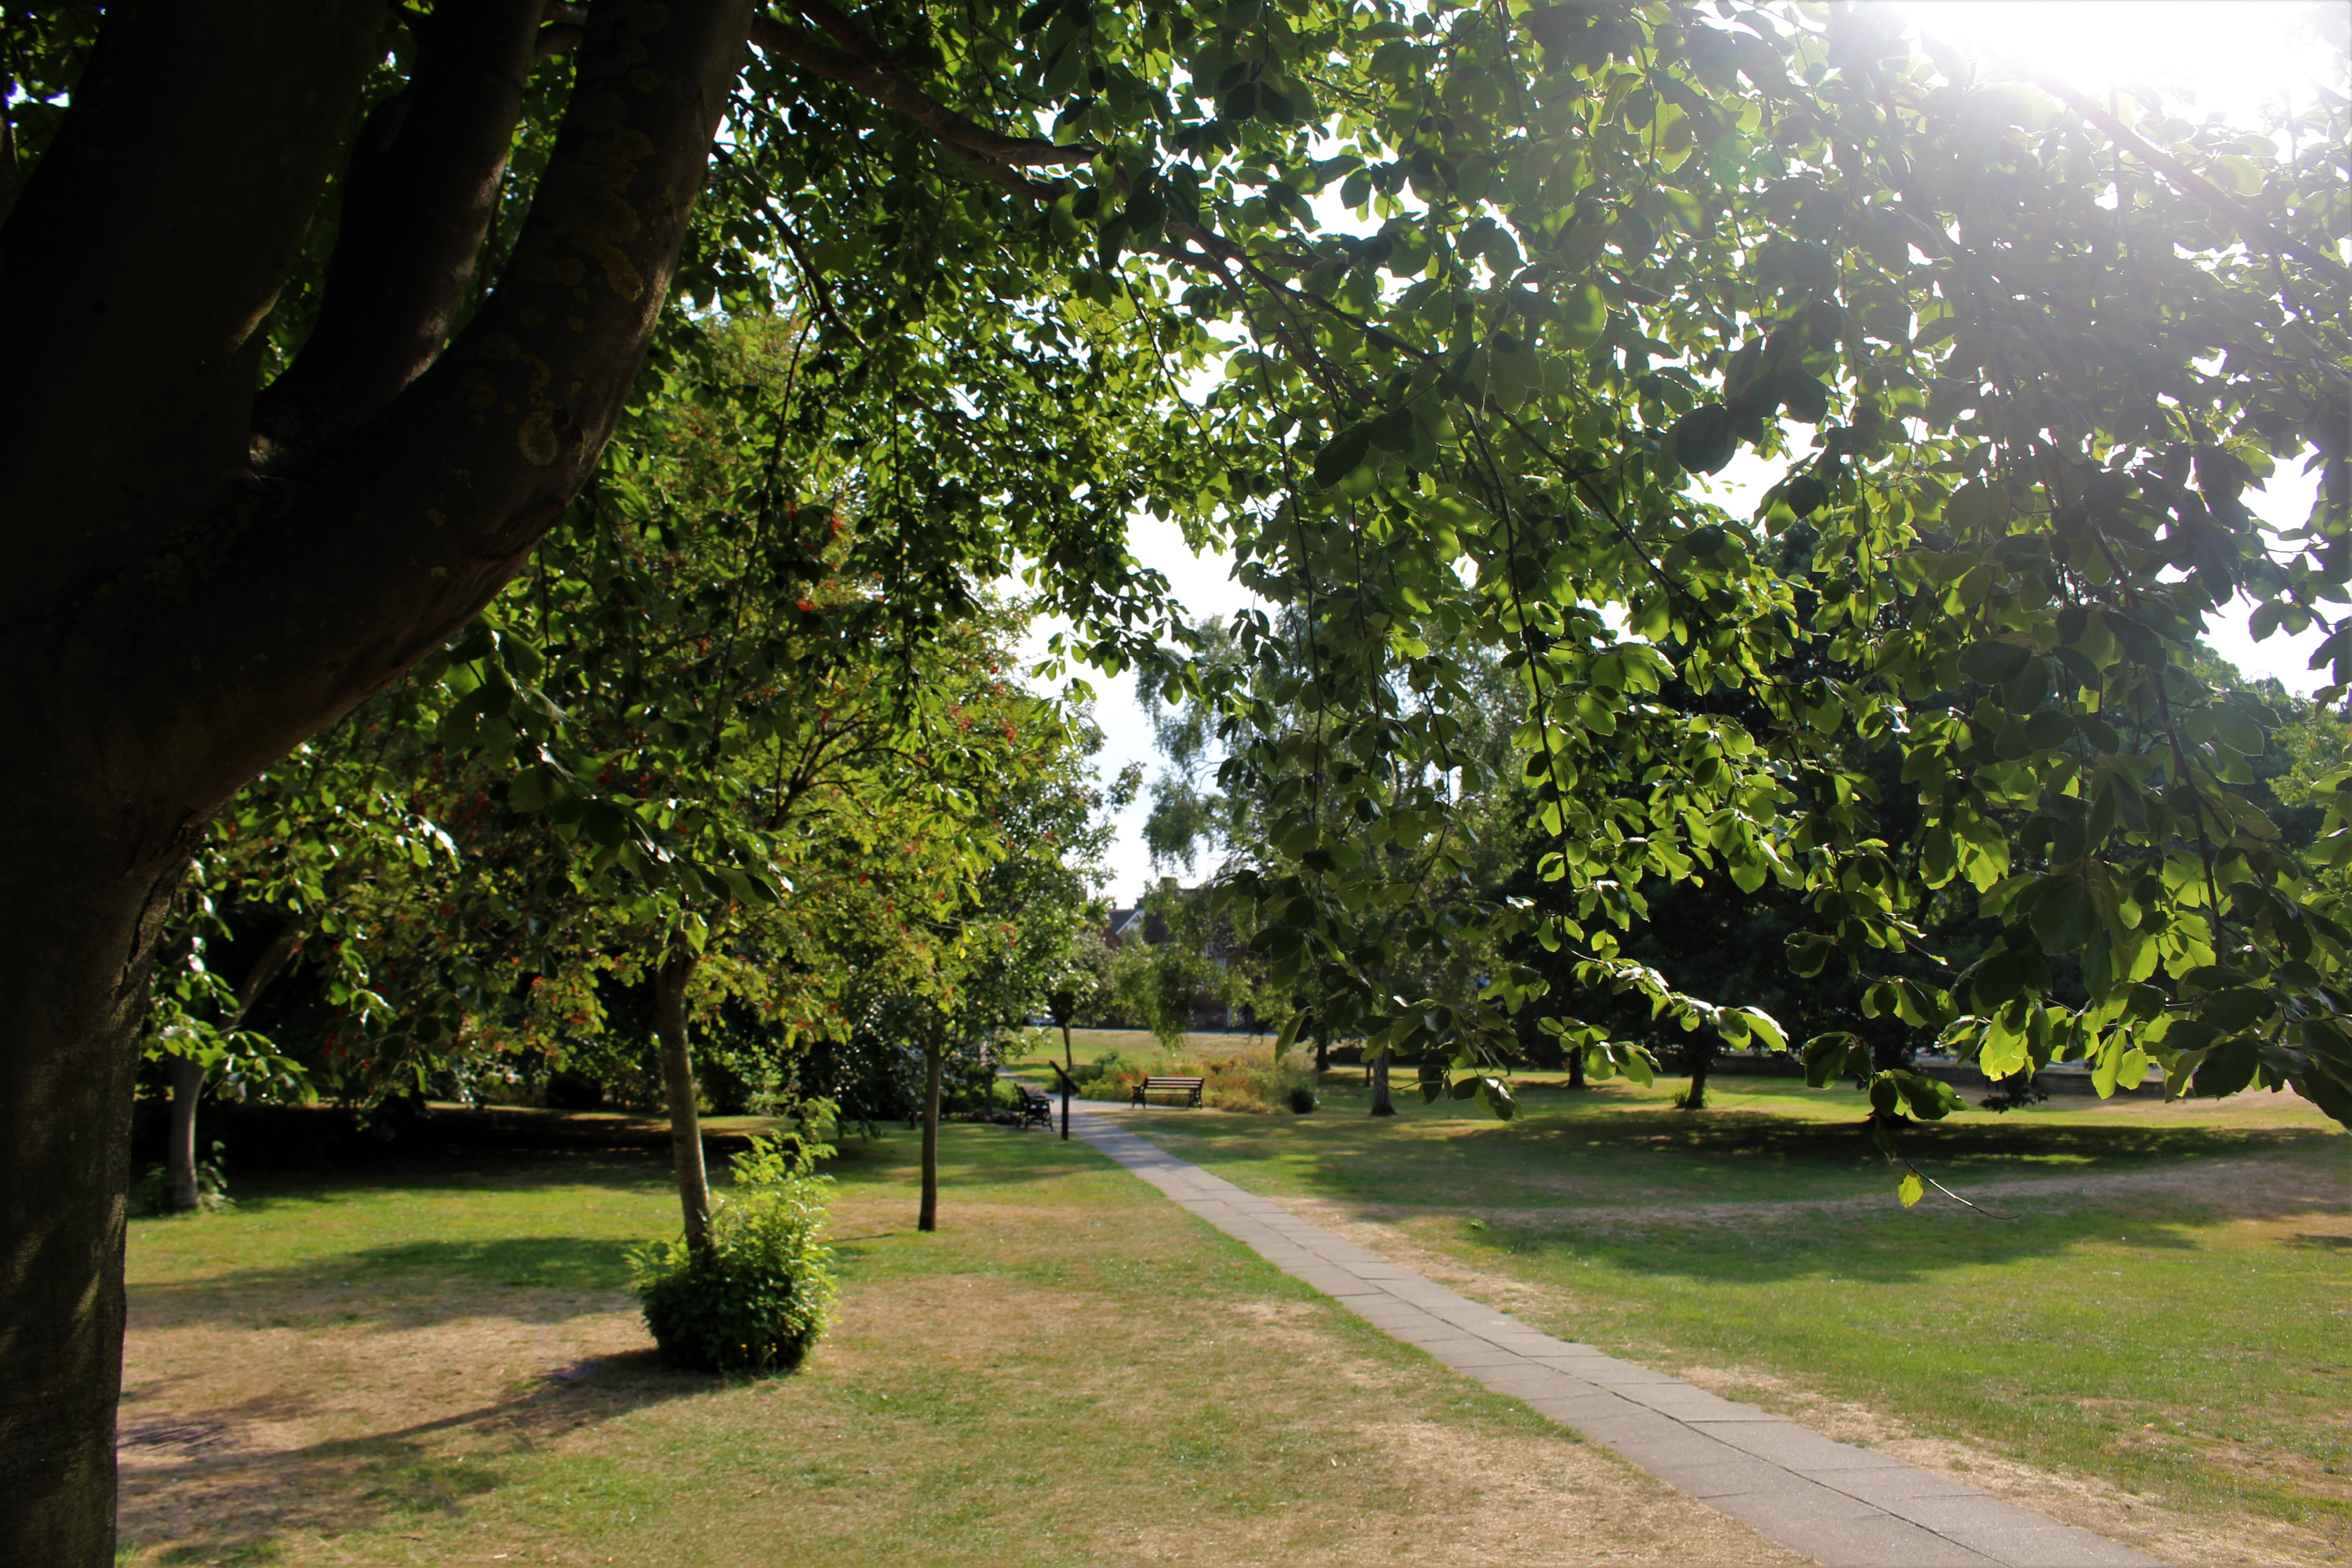 Wyndham Park Greenery